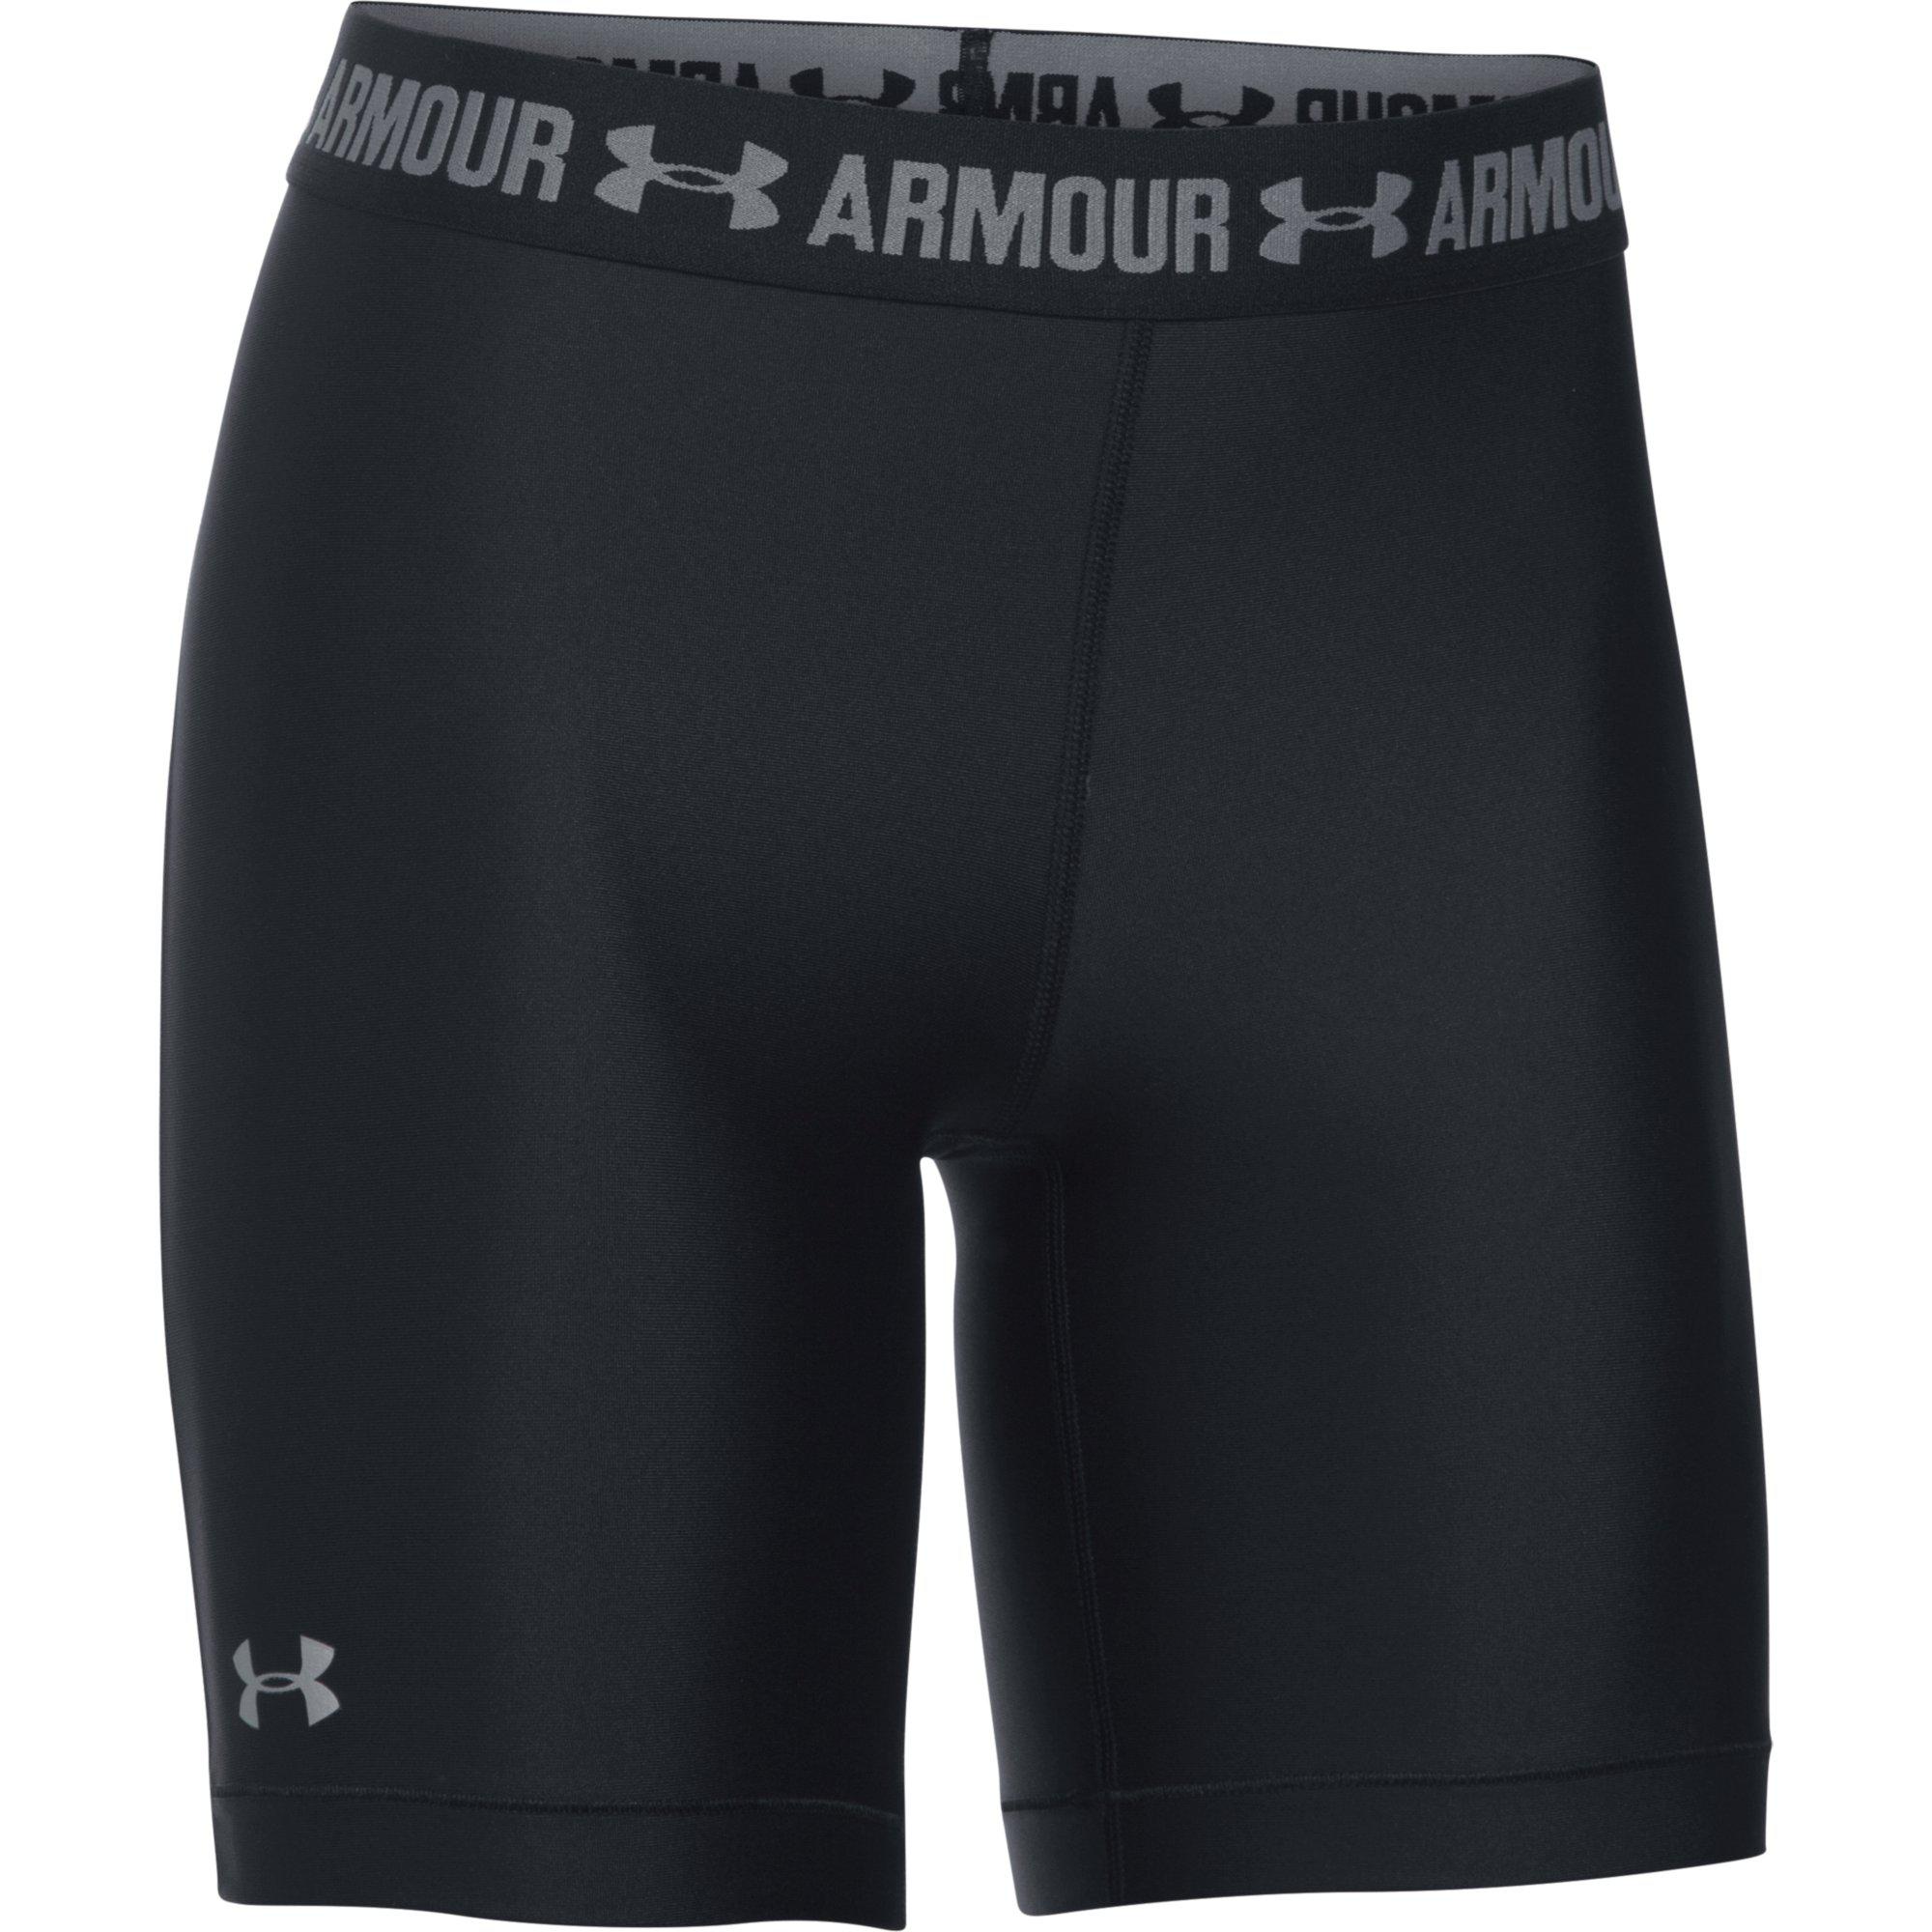 under armor compression shorts